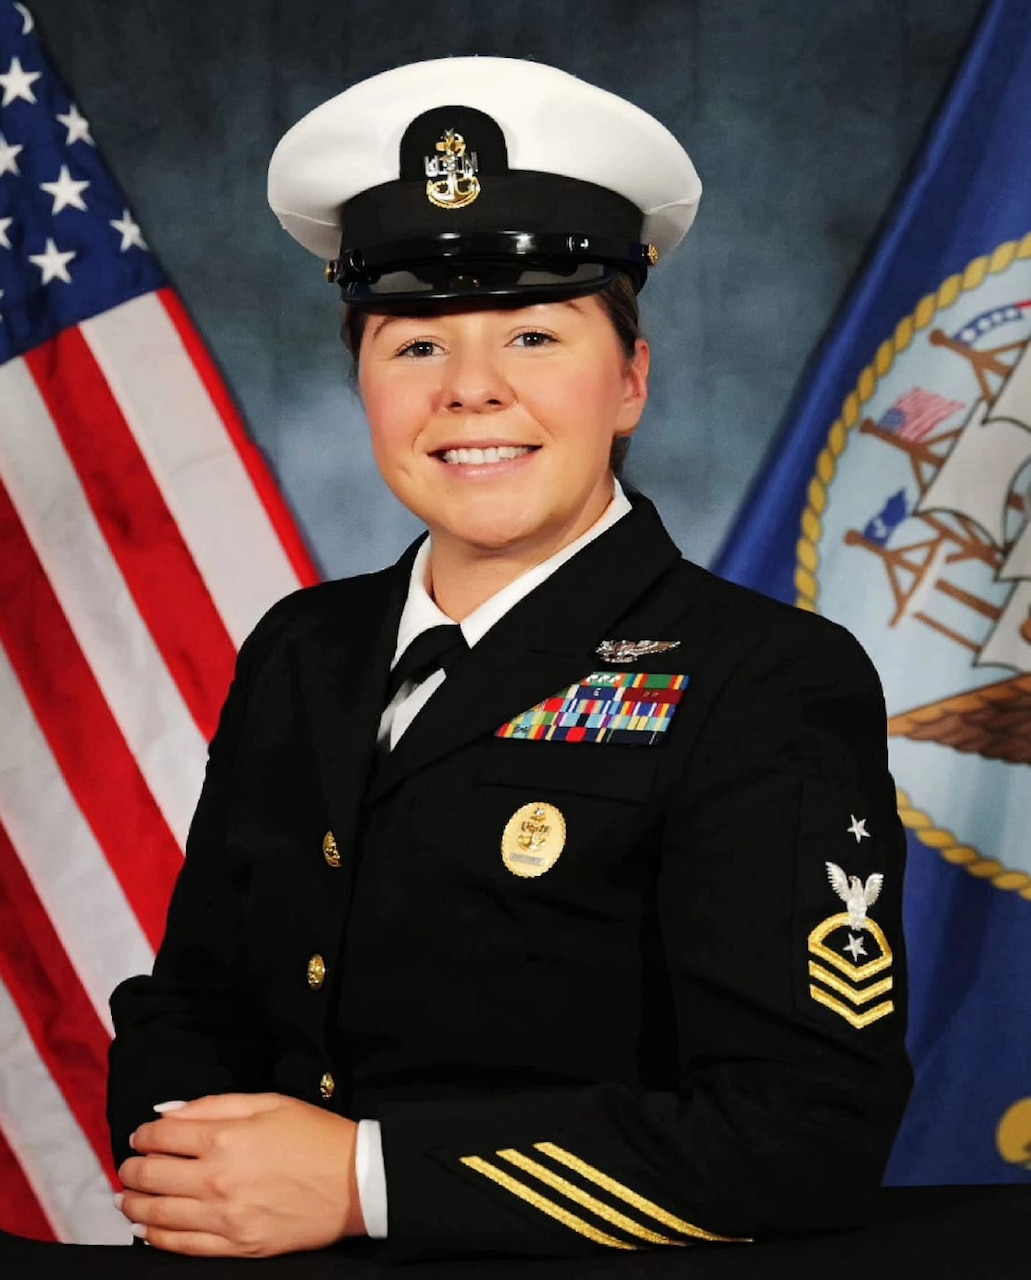 Command Senior Chief (AW) Jessica C. McHargue